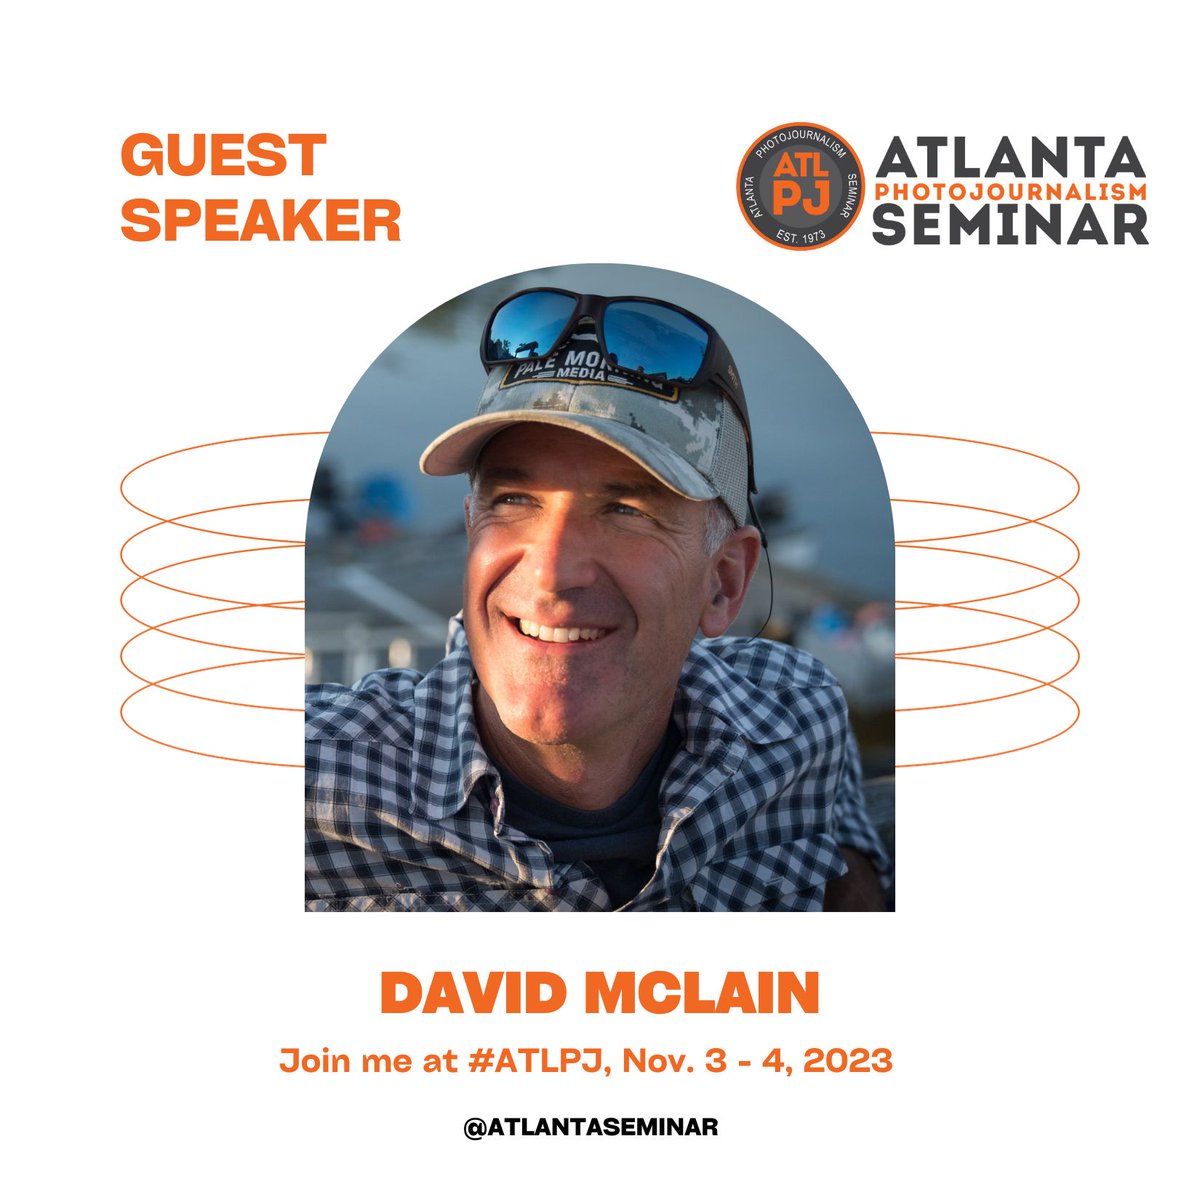 Meet #ATLPJ 2023 Speaker David McLain View his bio and plan to attend The Seminar Nov. 3-4. photojournalism.org/2023-speakers